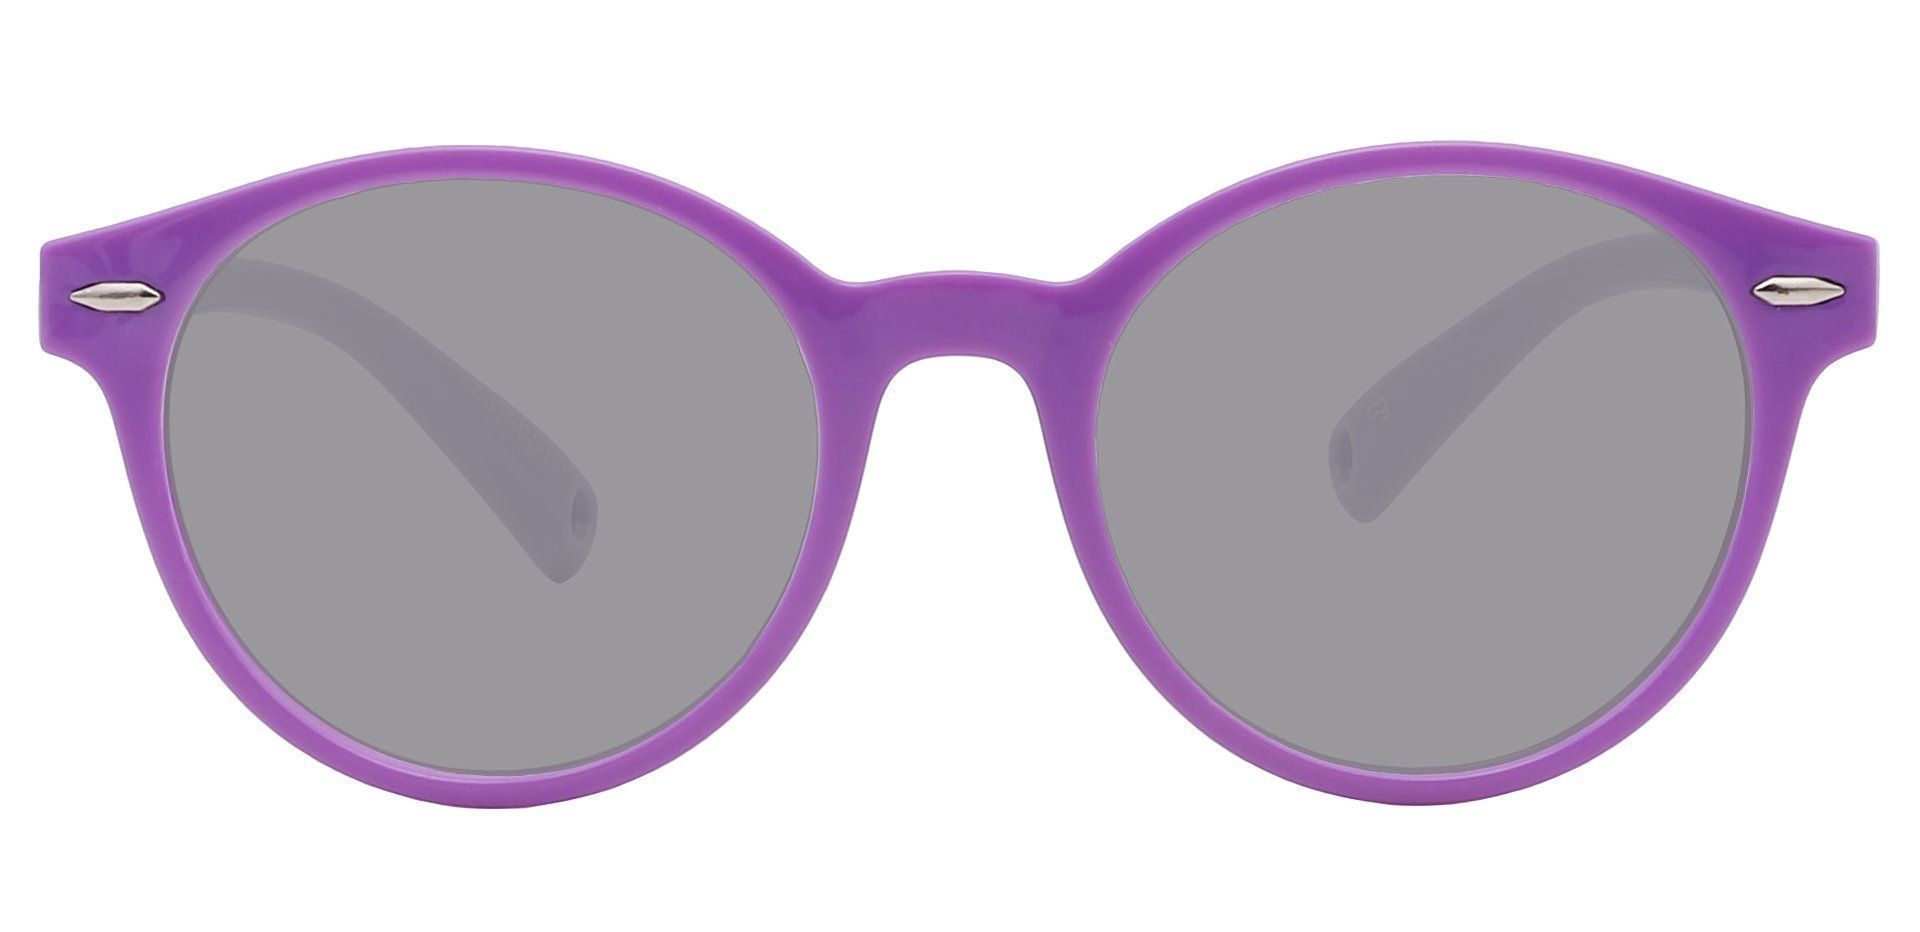 Harris Round Non-Rx Sunglasses - Purple Frame With Gray Lenses